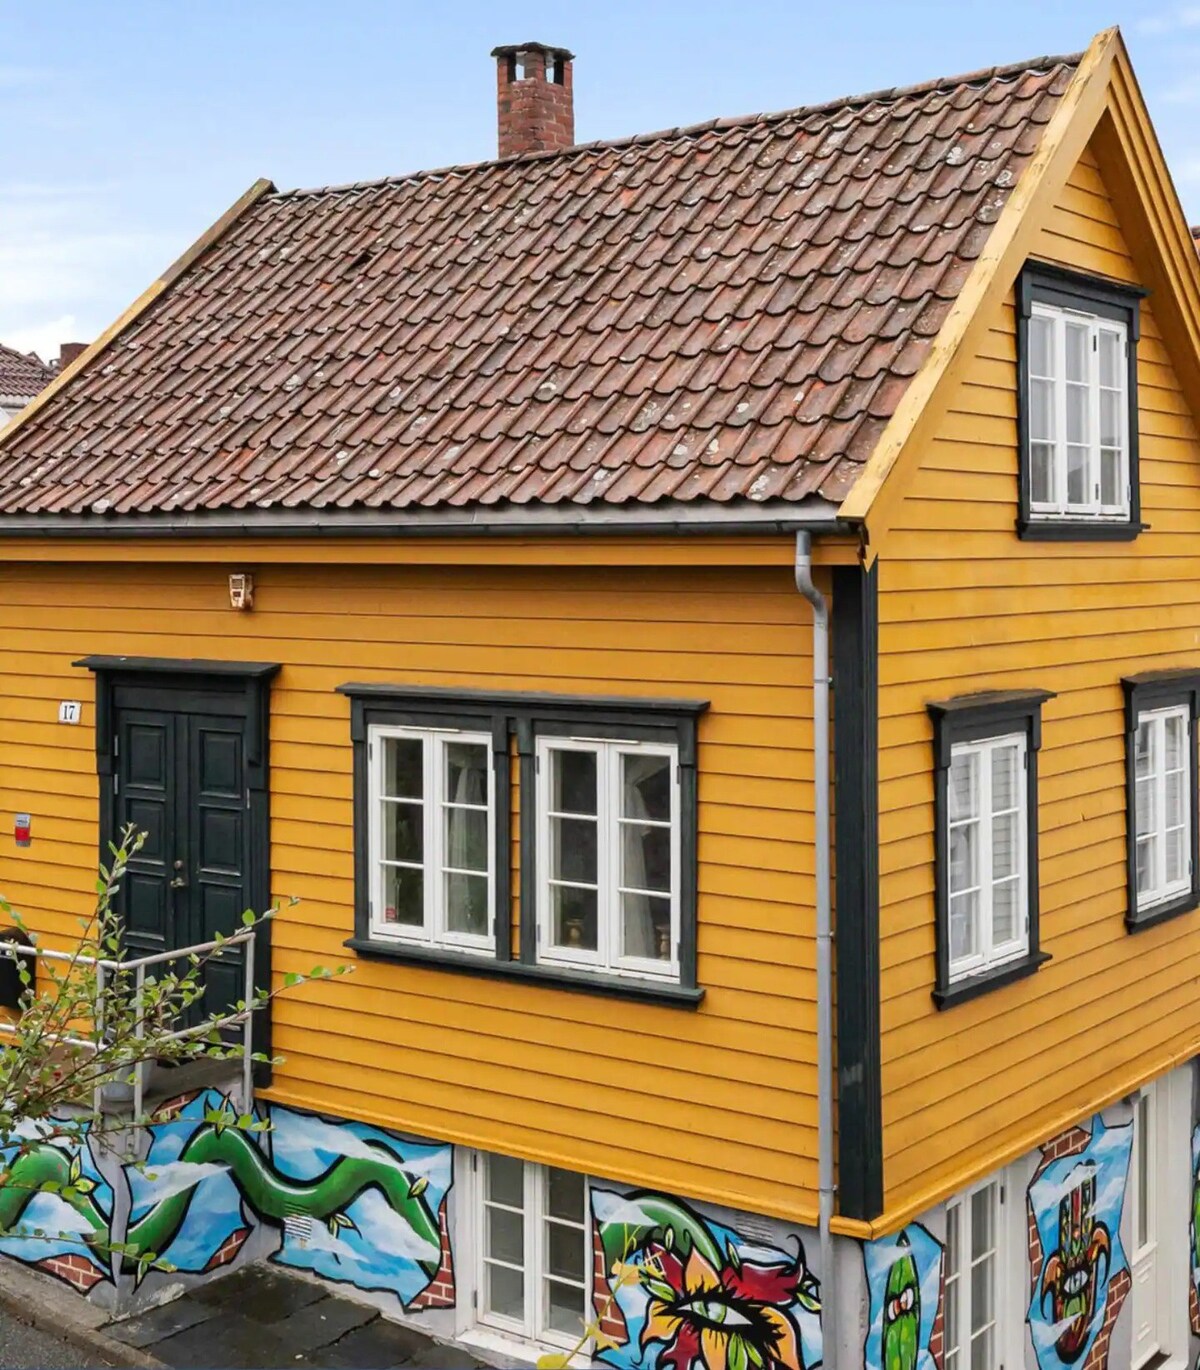 Cozy 1860s house in central Stavanger